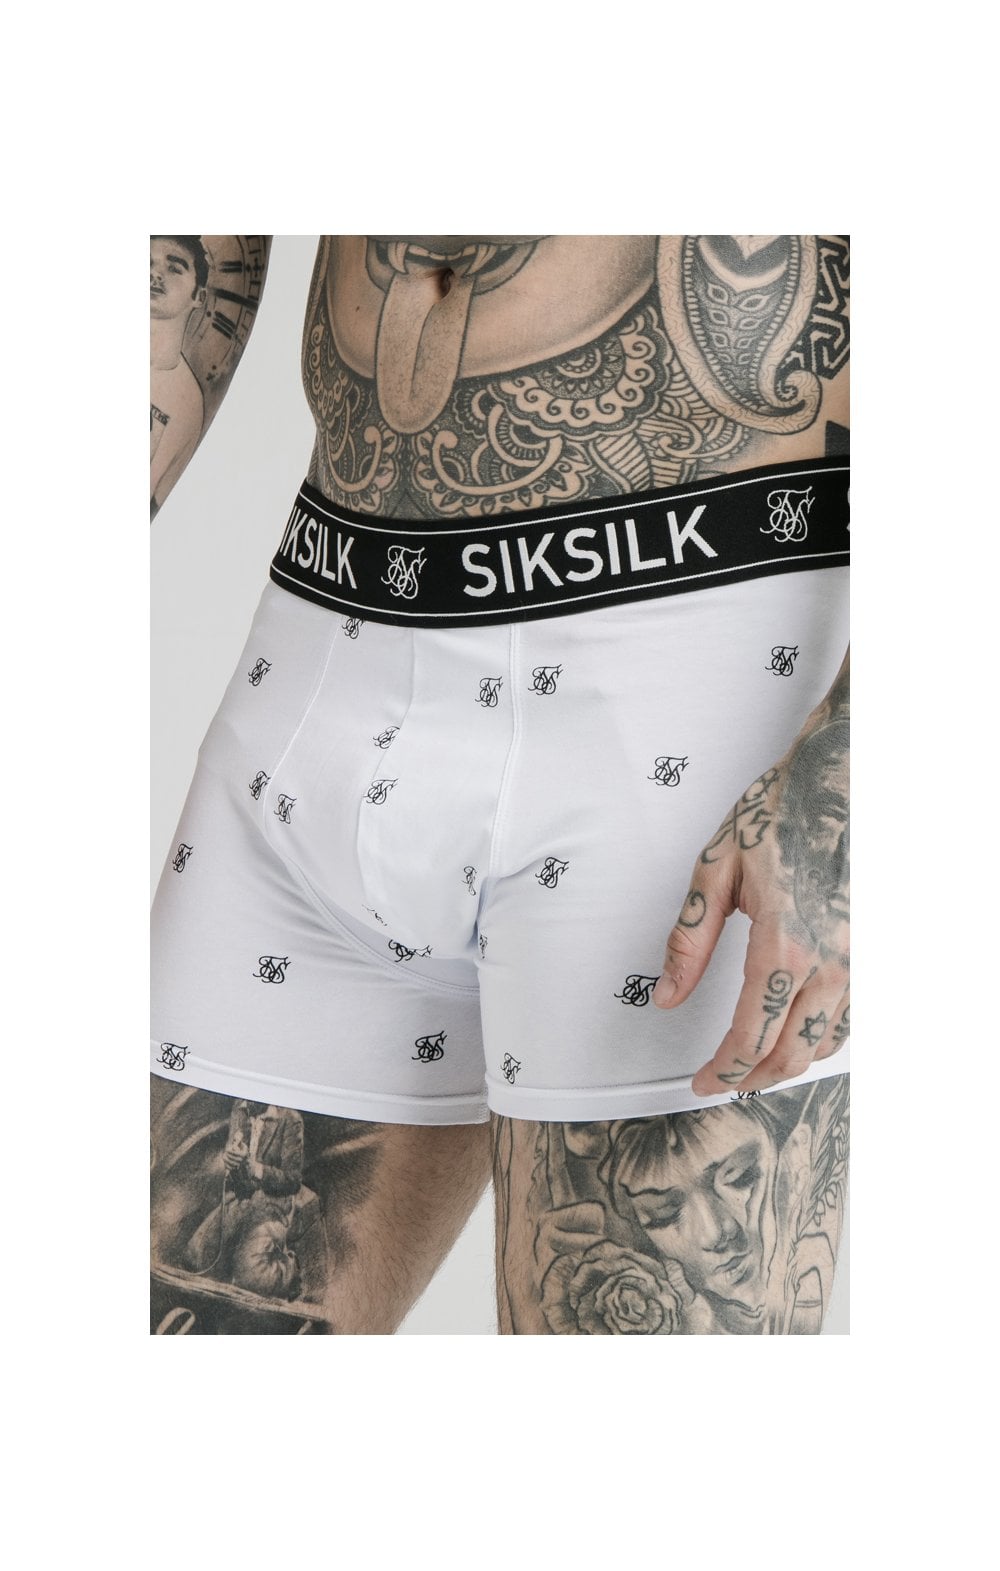 SikSilk Logo Taped Boxer Shorts (2 Pack) - White &amp; Black Pack of 2 Boxers - 1 White pair and 1 Black pair (2)